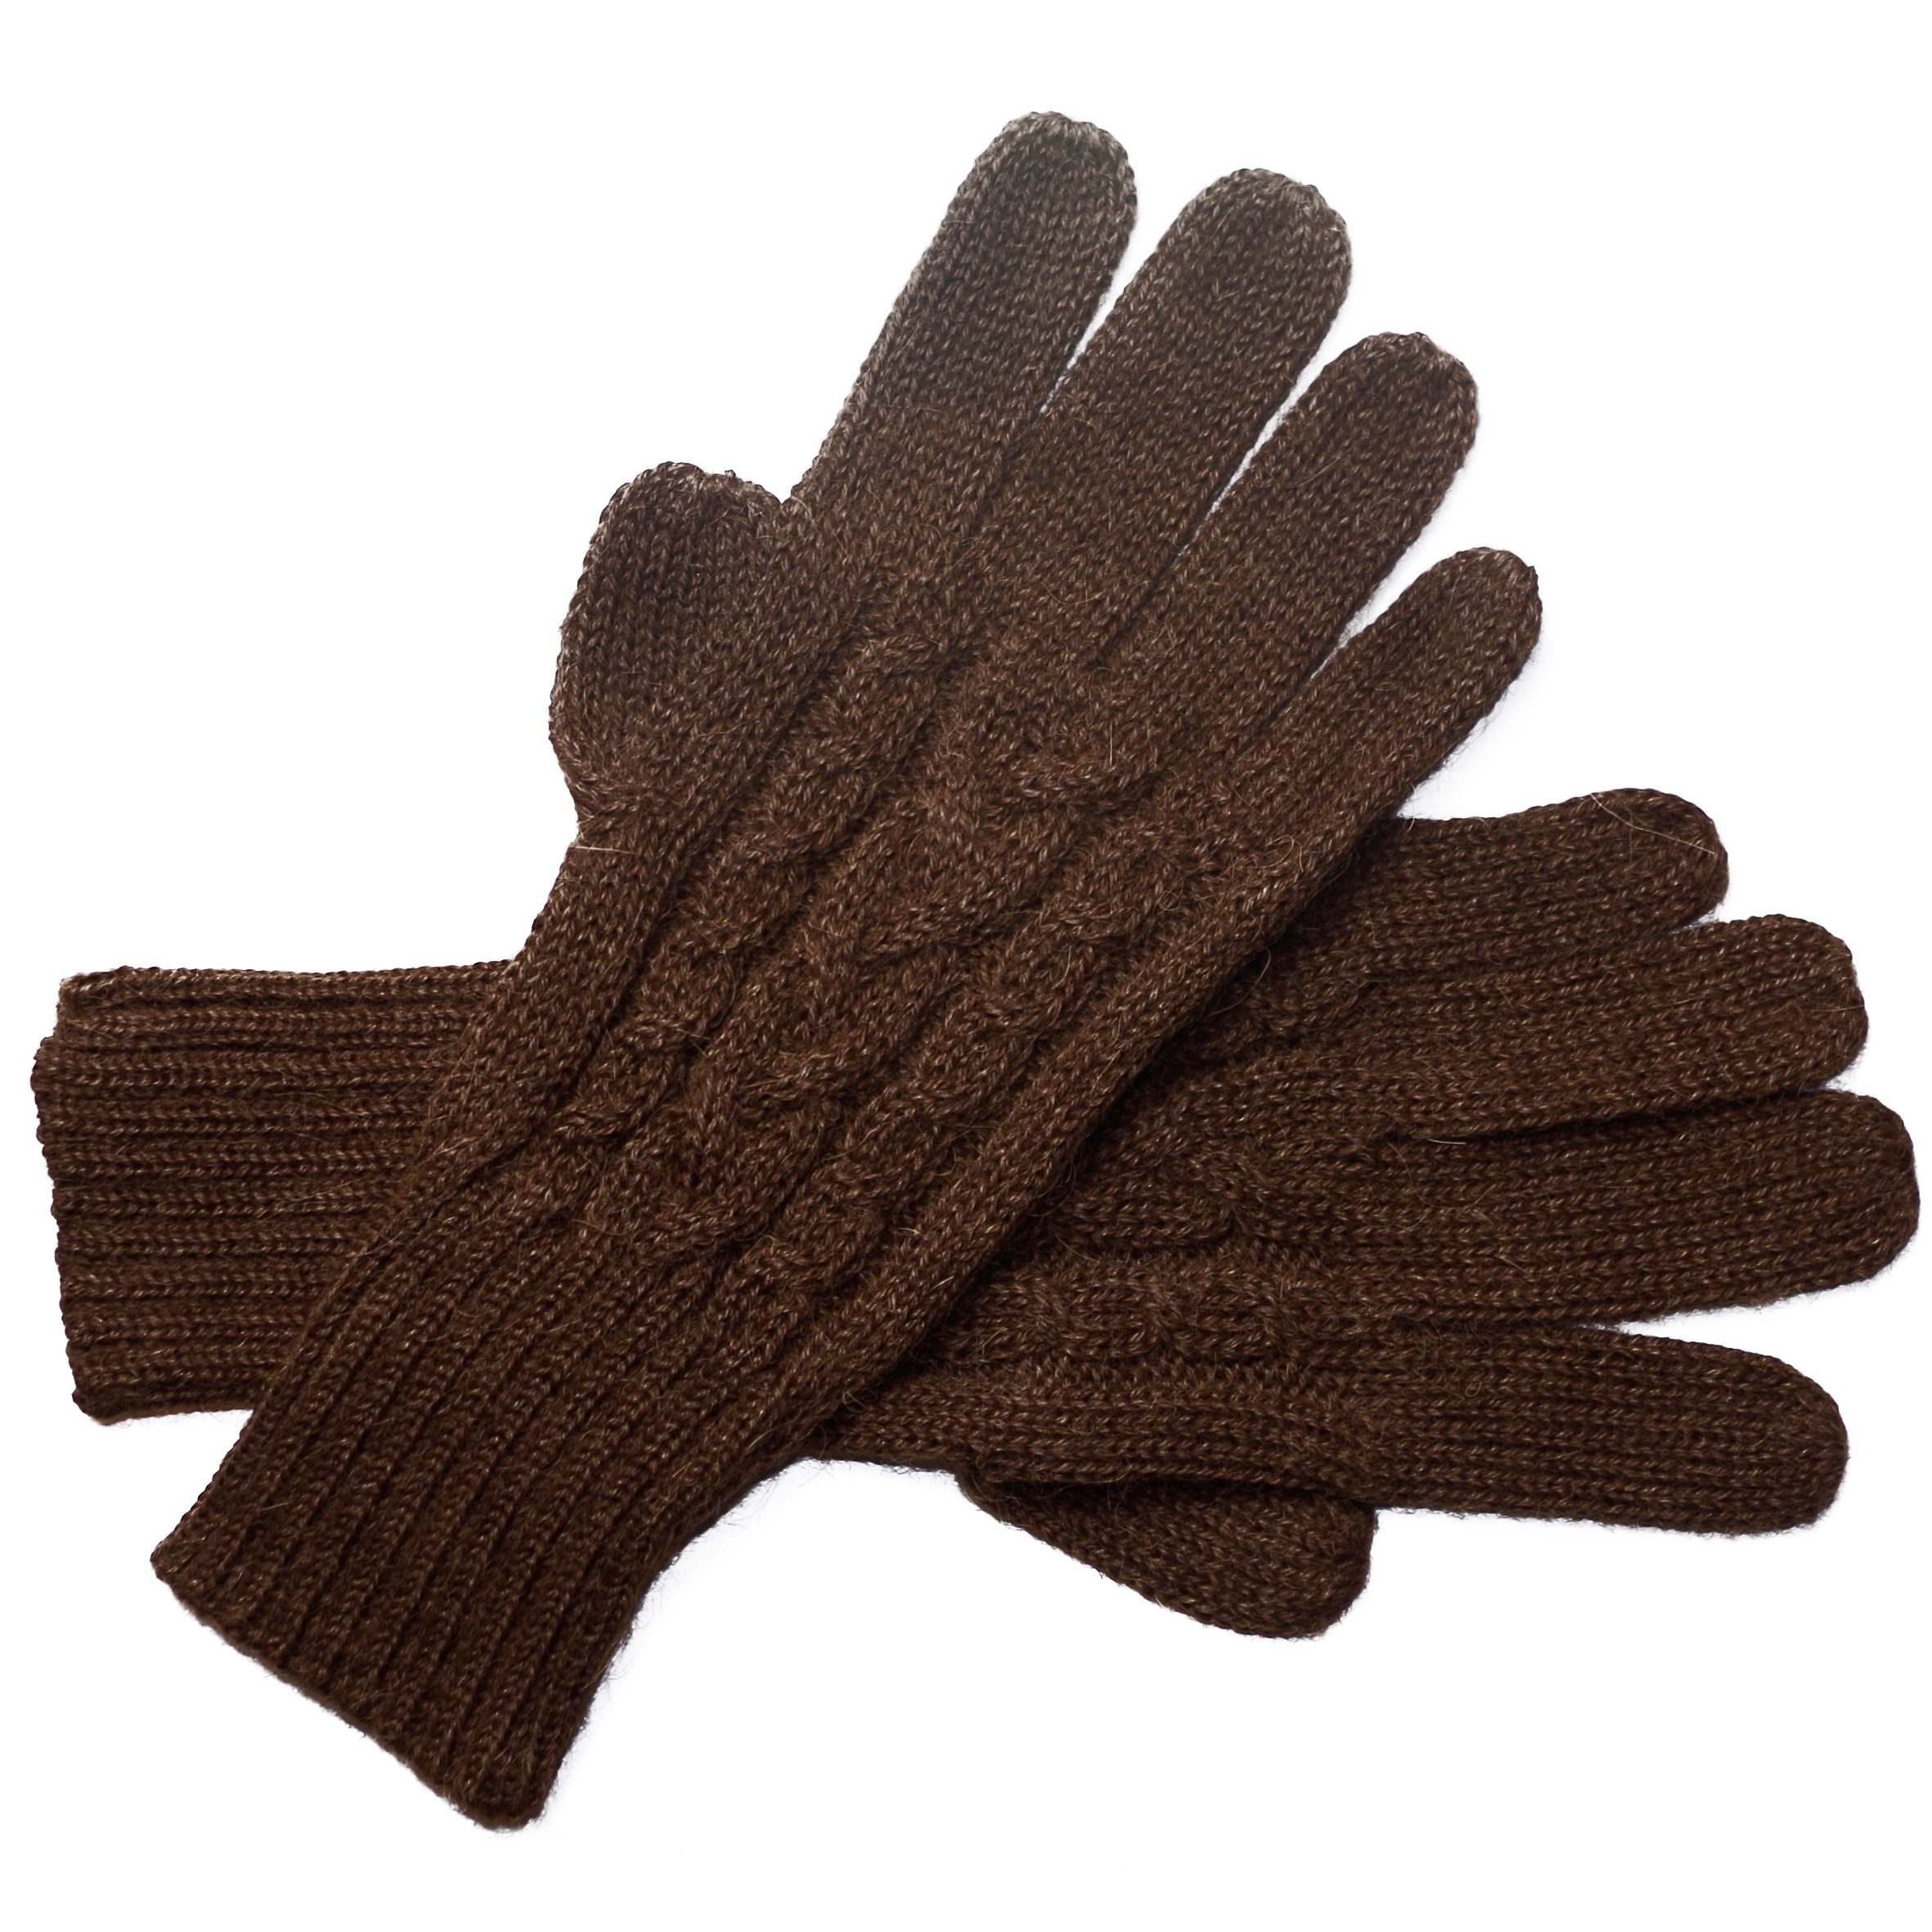 Sonderangebotsbedingungen Posh Gear Strickhandschuhe Guantibrada Alpaka Alpakawolle 100% braun Fingerhandschuhe aus